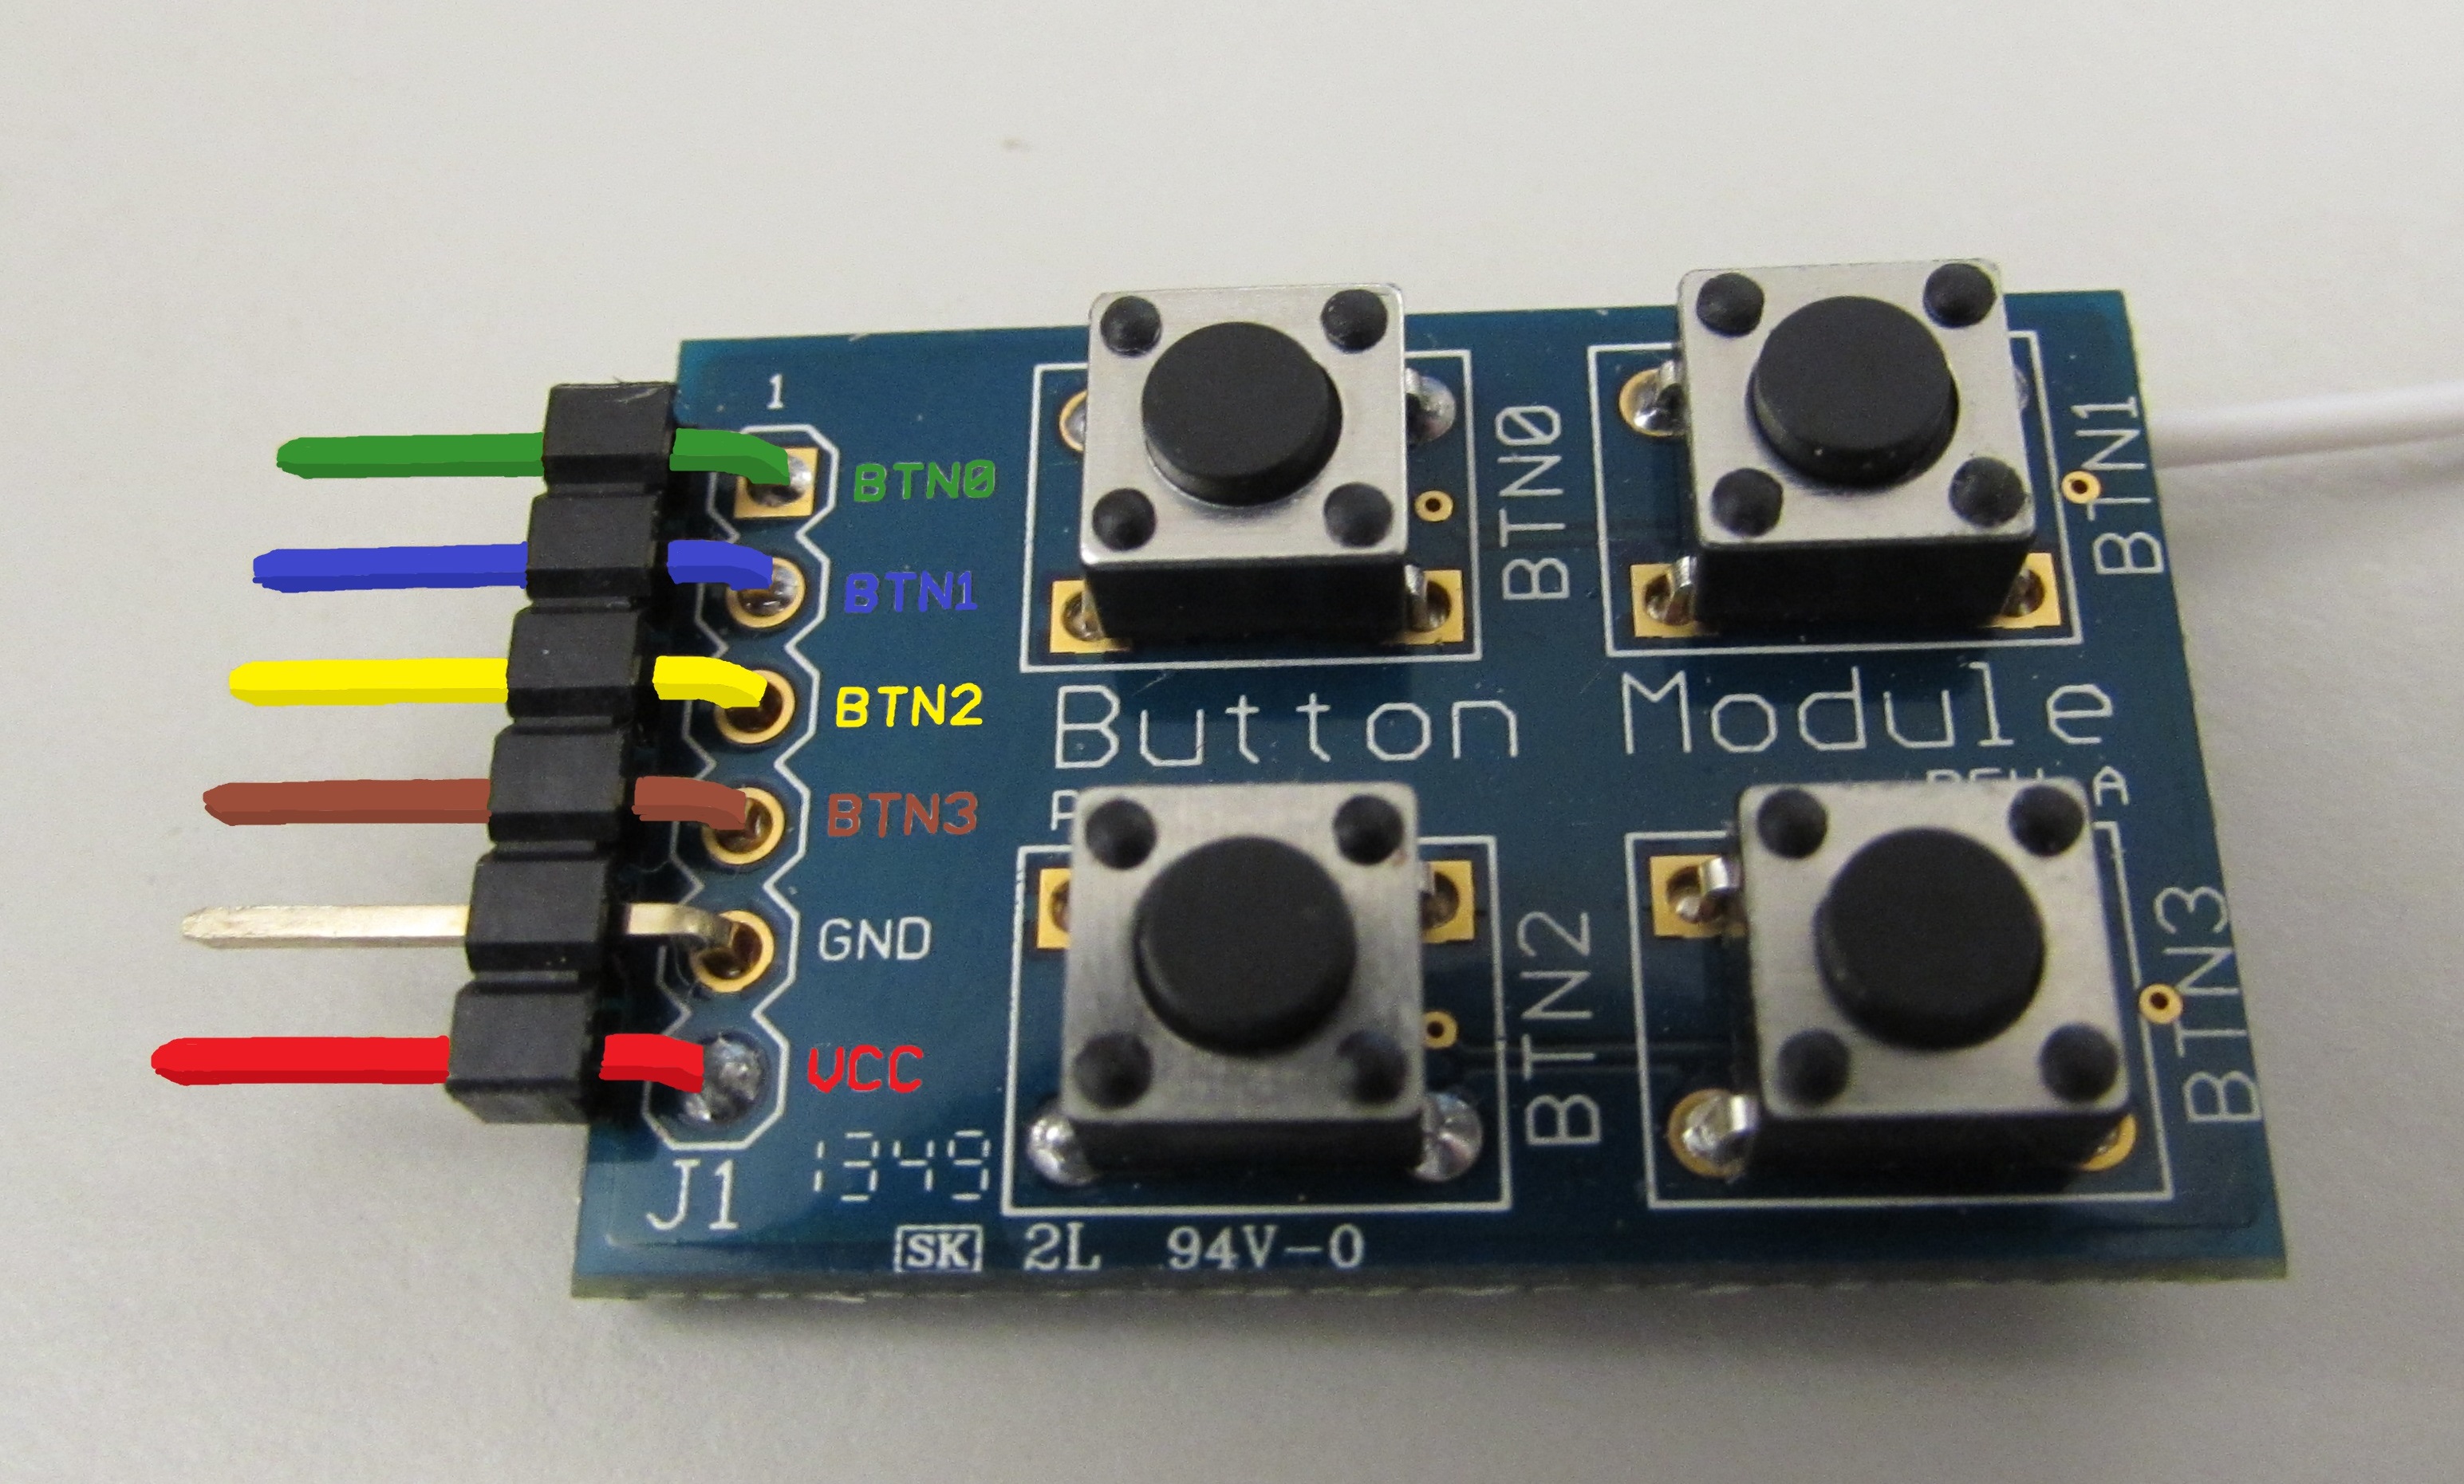 Digilent's GPIO Pmod Button Module